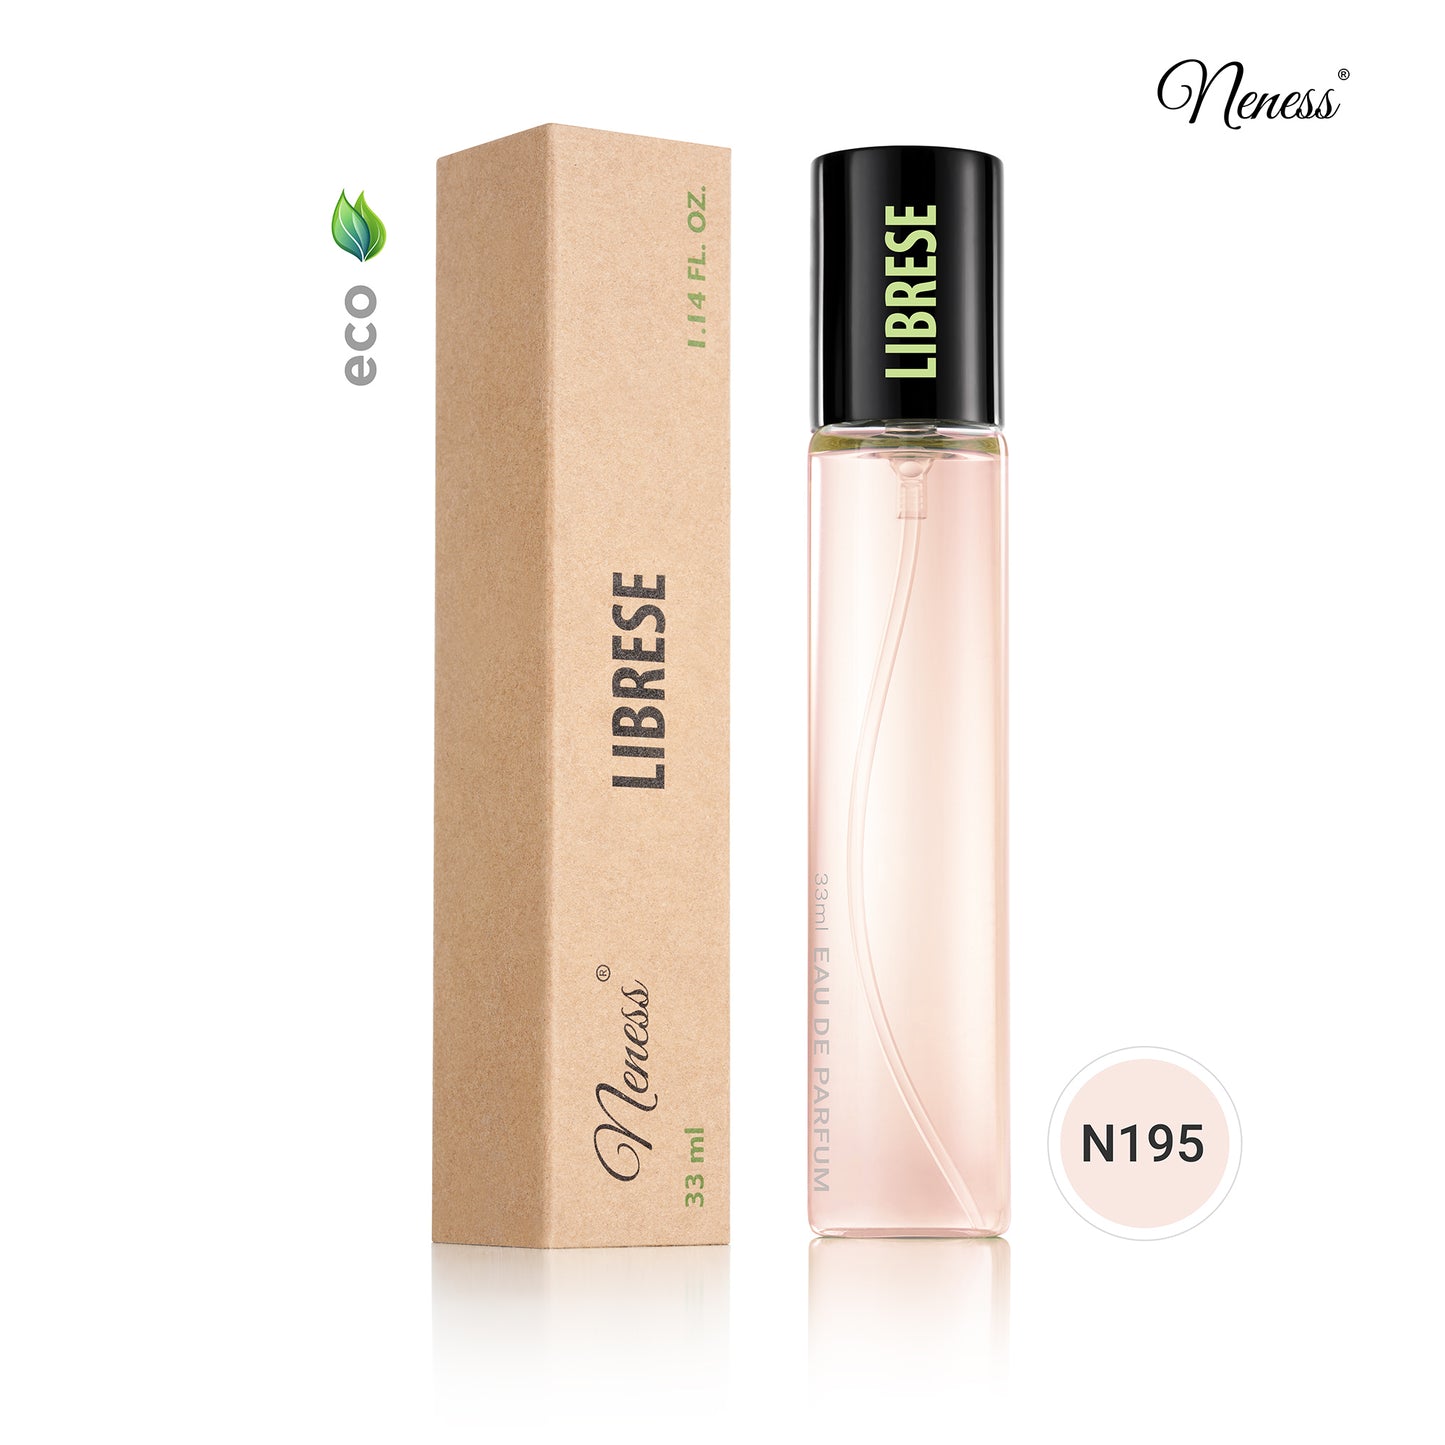 N195. Neness Librese - 33 ml - Perfume For Women